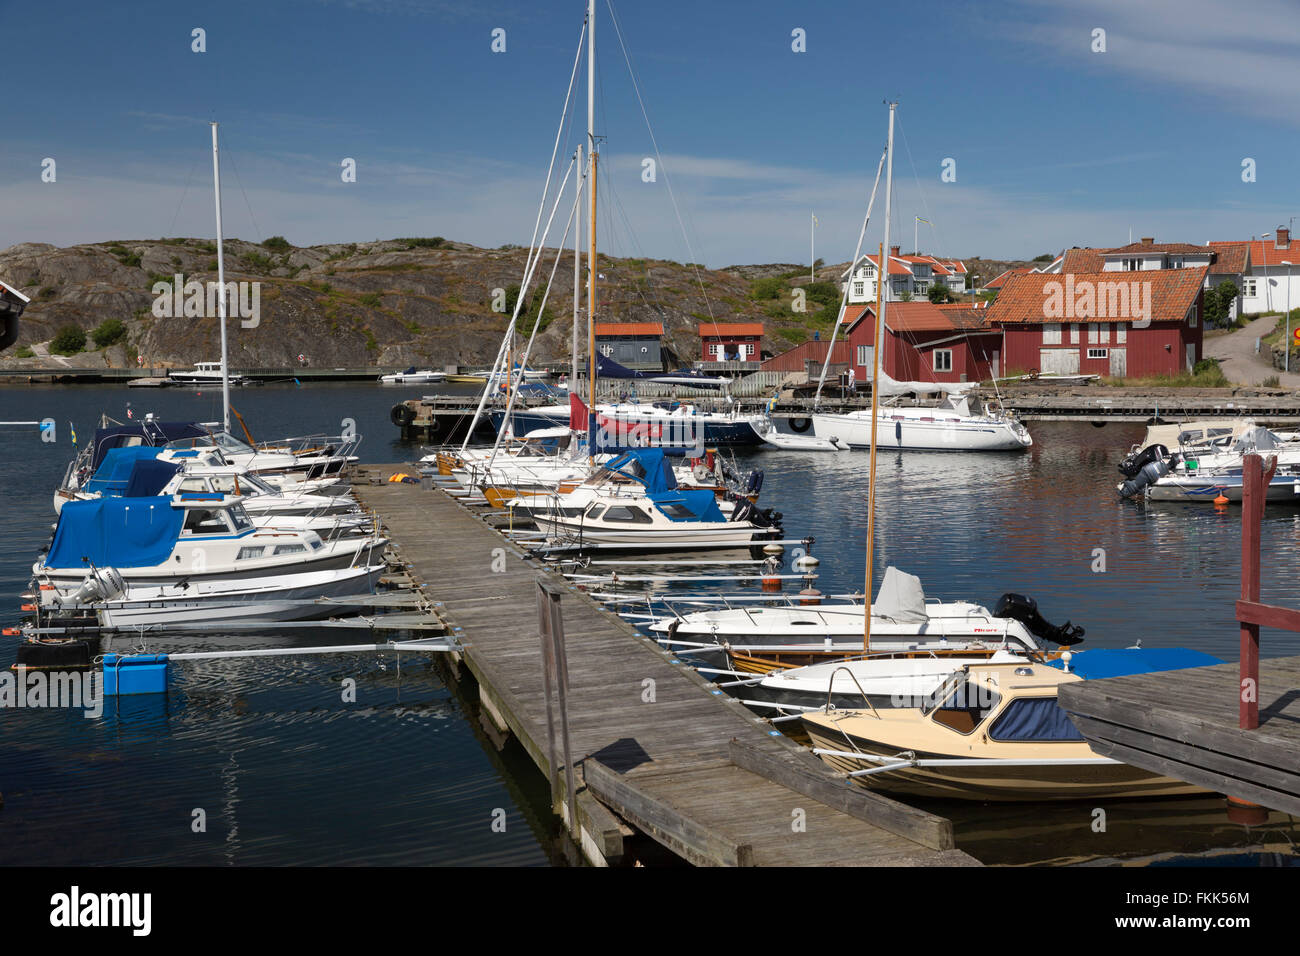 View over harbour, Hälleviksstrand, Orust, Bohuslän Coast, Southwest Sweden, Sweden, Scandinavia, Europe Stock Photo